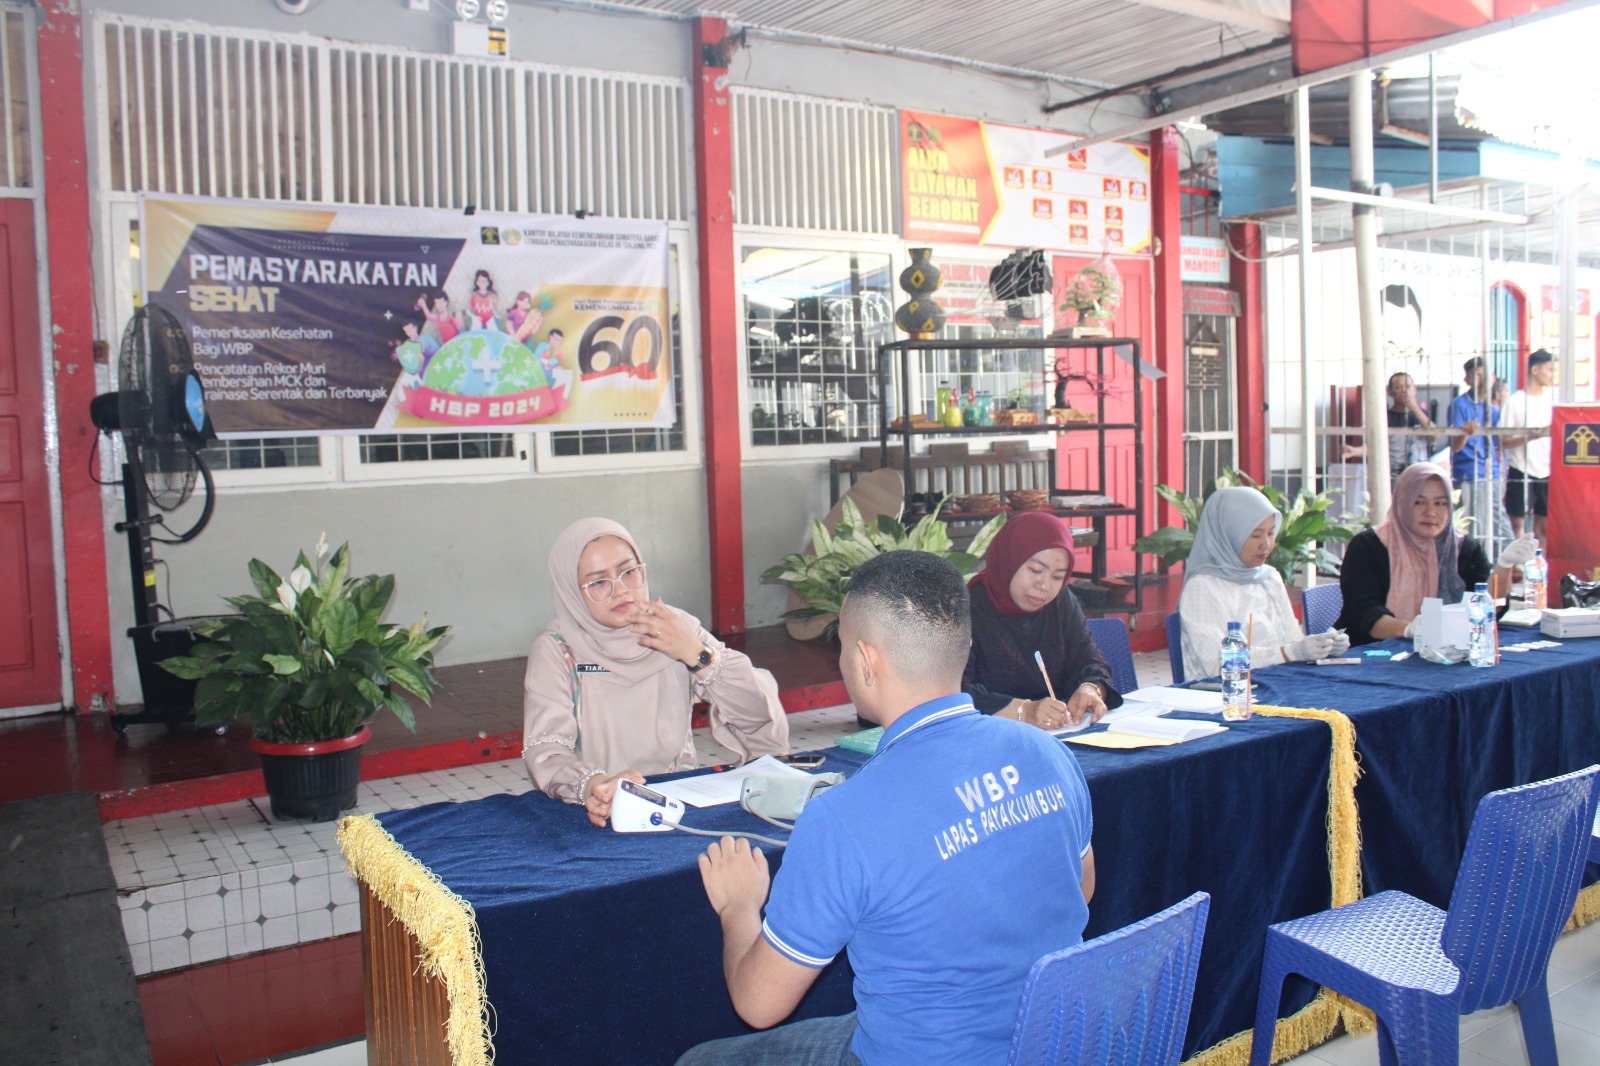 Memperingati Hari Bakti Pemasyarakatan (HBP) yang ke-60, Lembaga Pemasyarakatan Kelas IIB Tanjung Pati menyelenggarakan serangkaian kegiatan dengan tema 